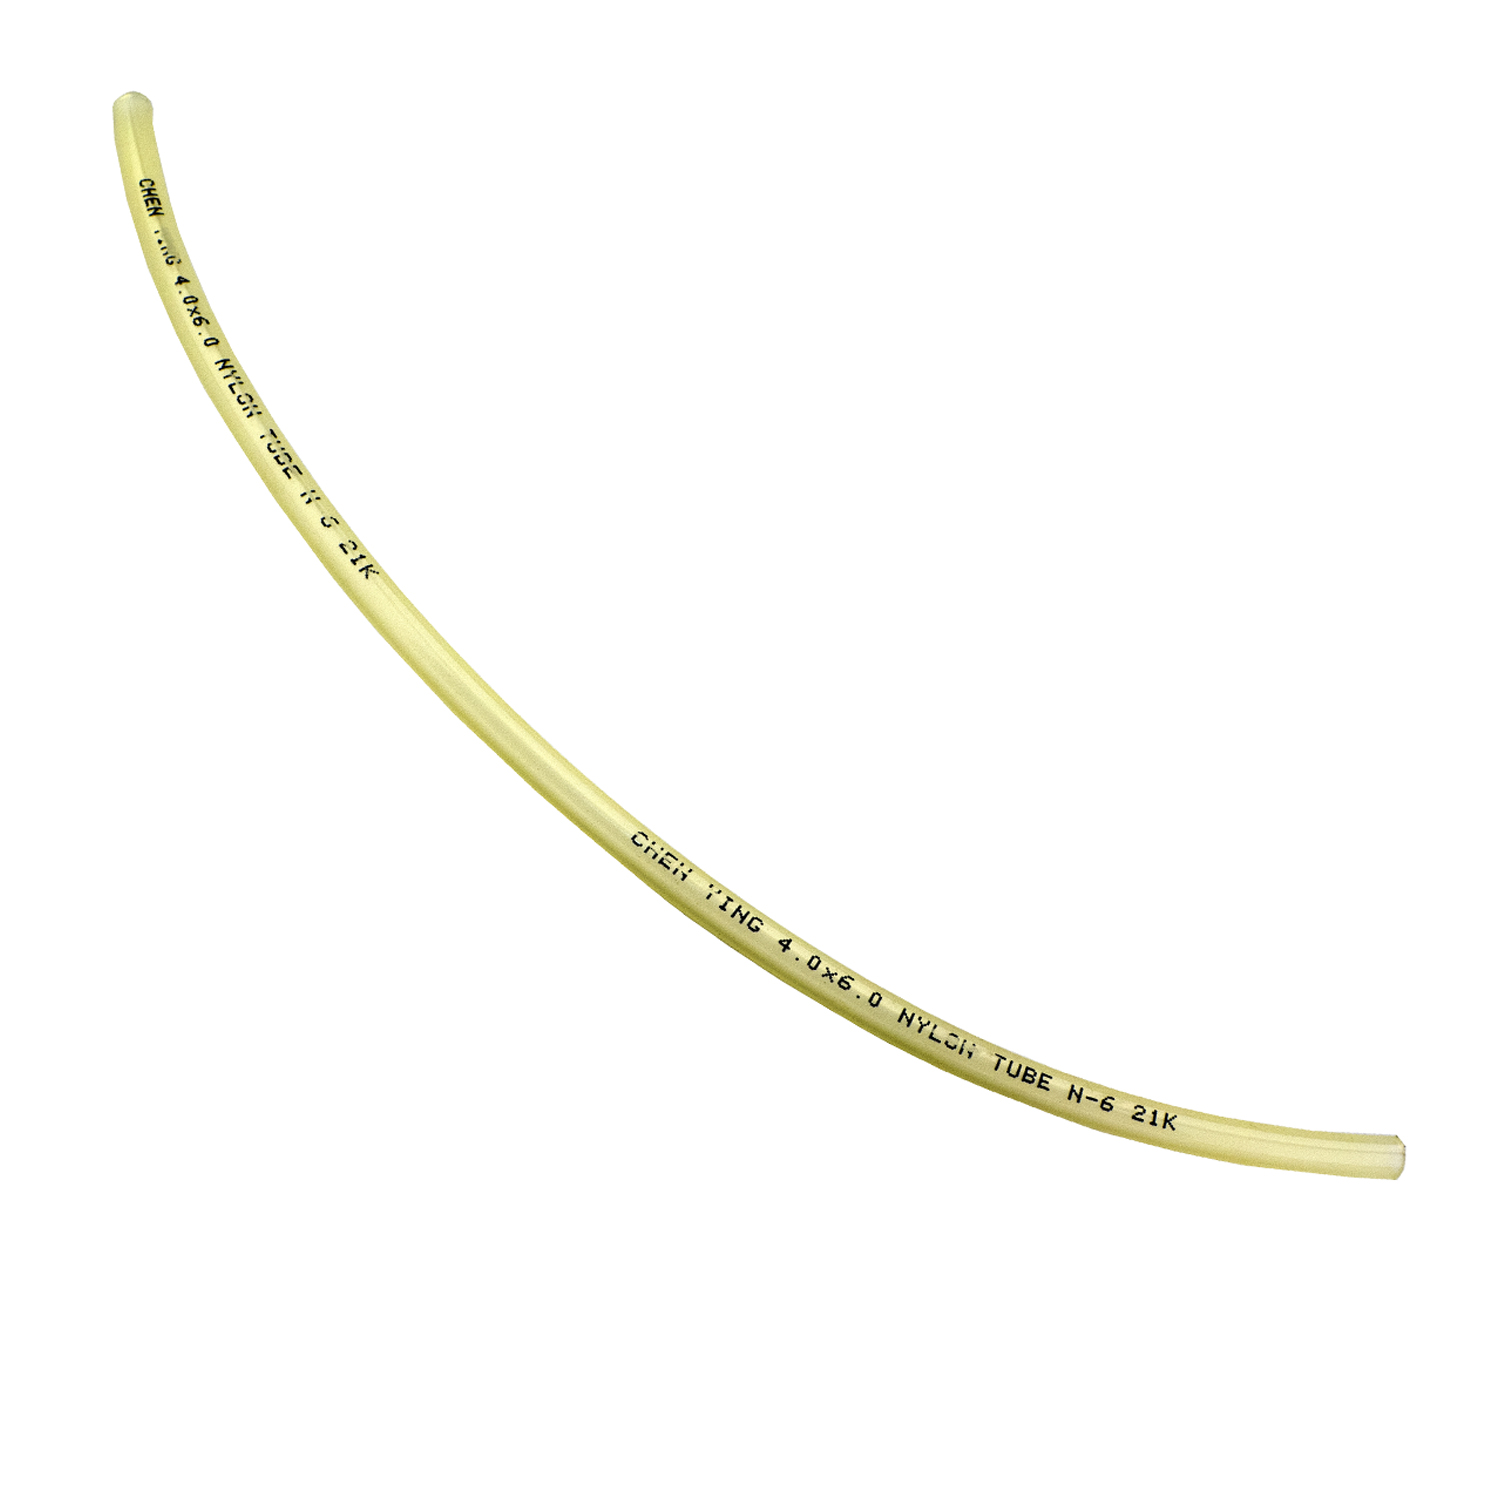 Нейлоновая трубка N-6, Ø4 мм  CHEN YING PPN01001